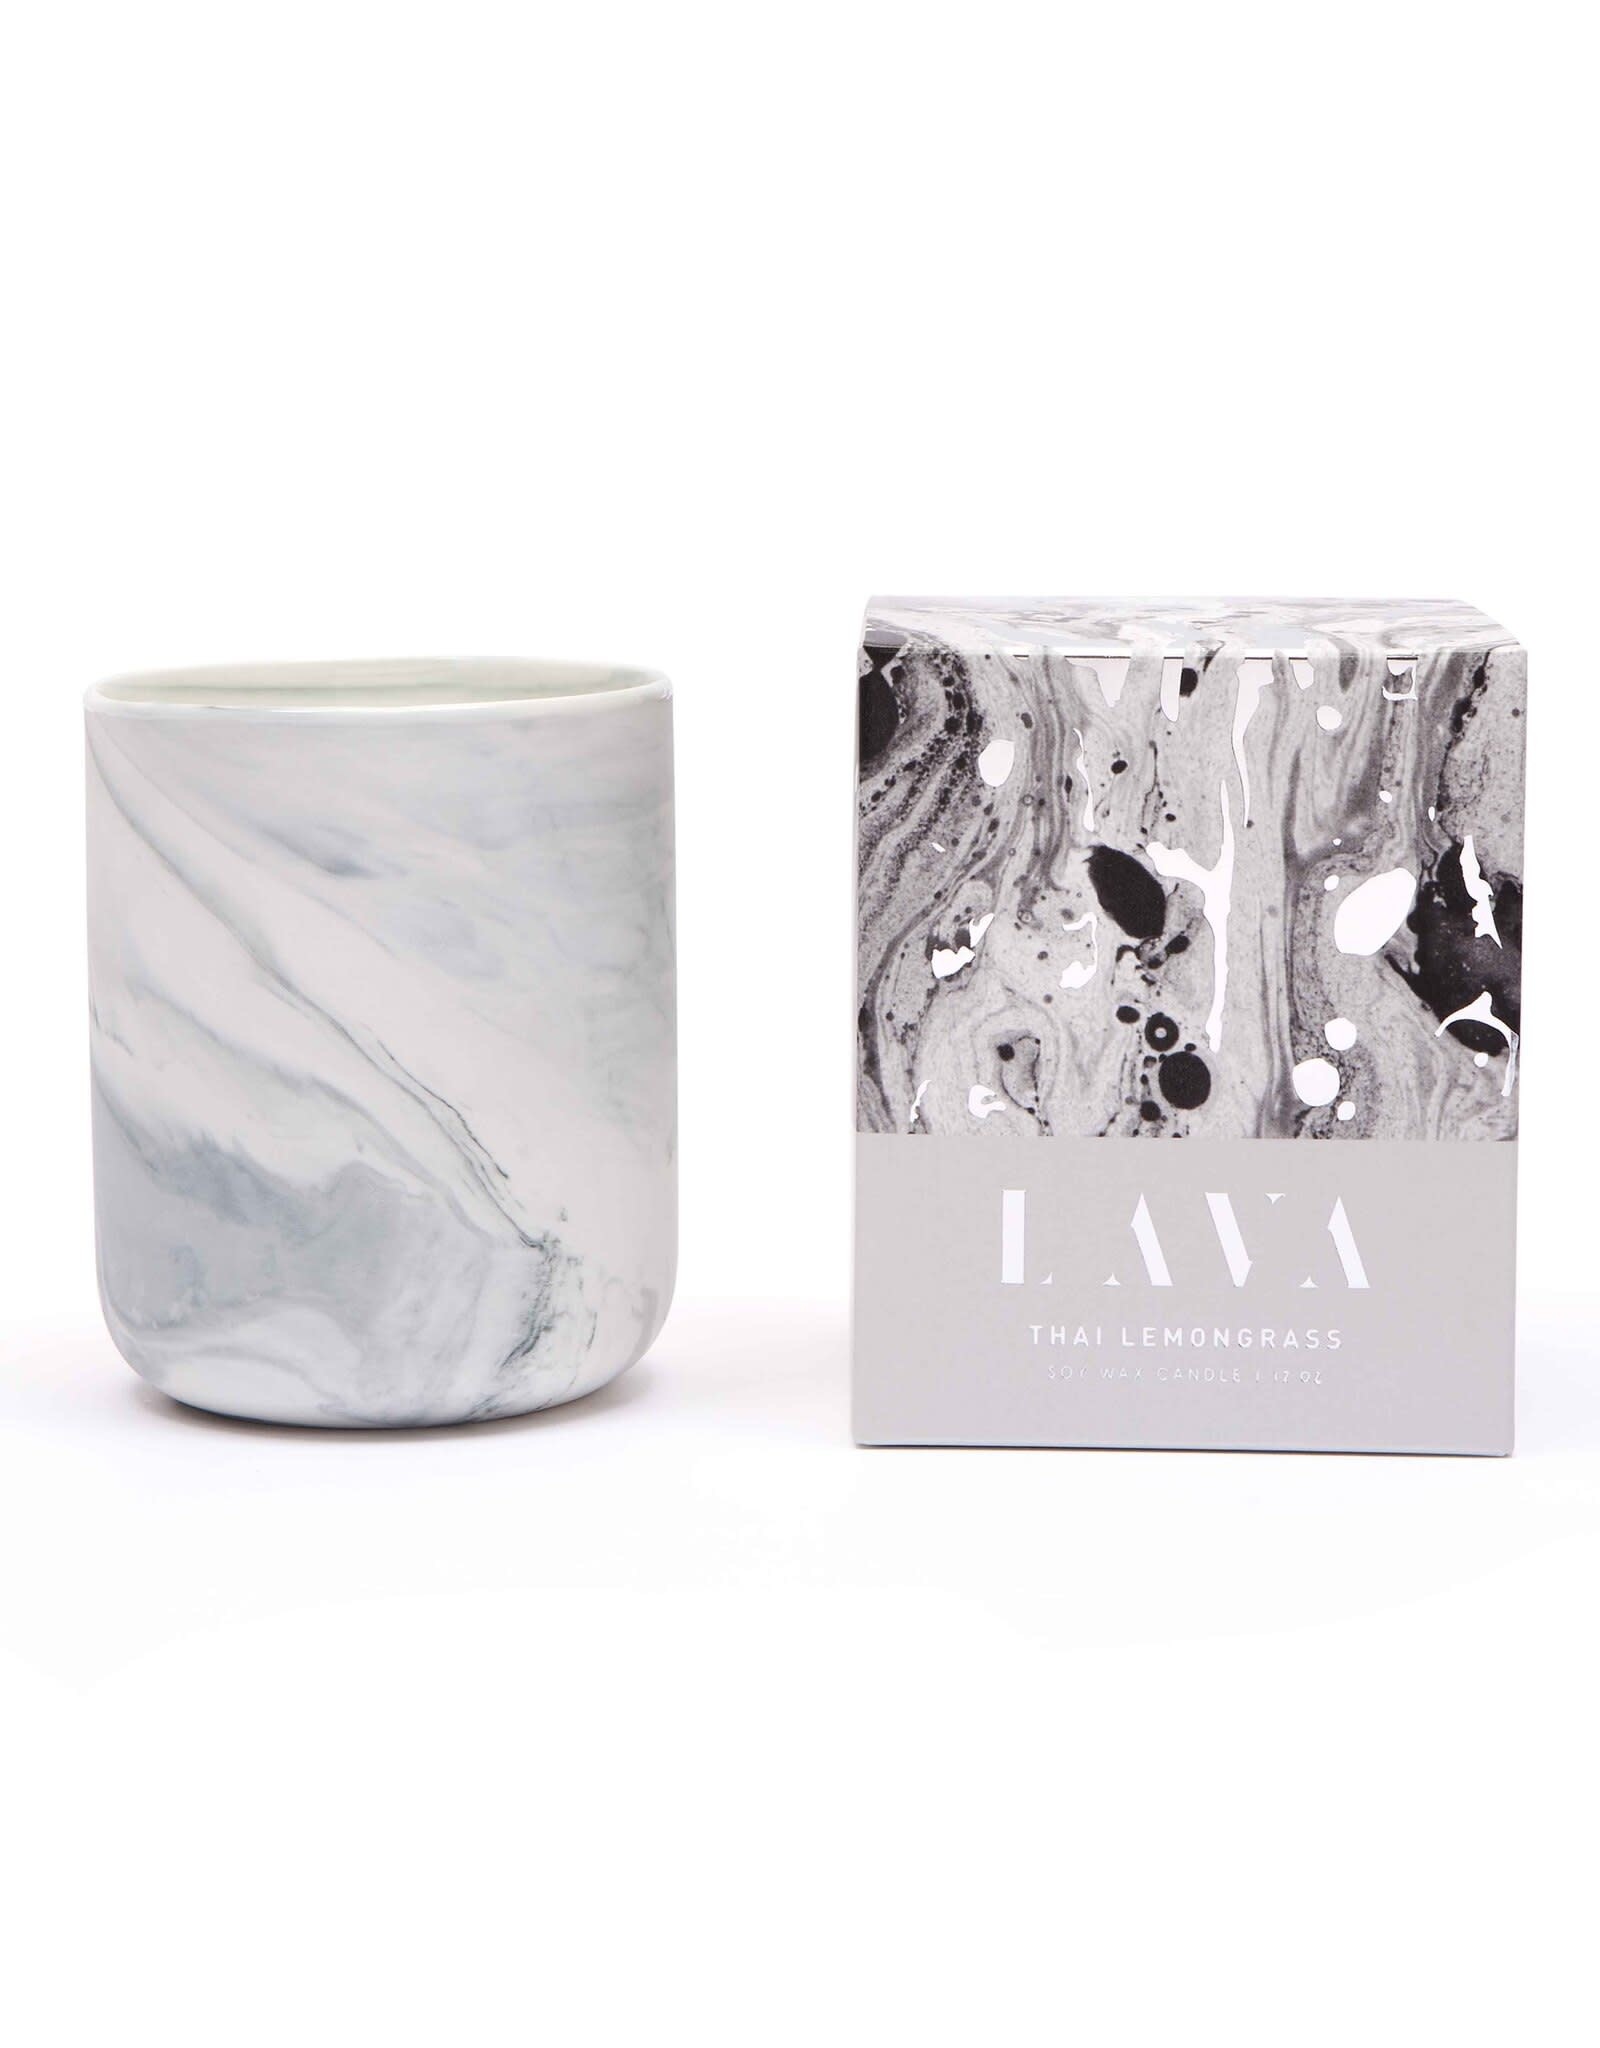 Lava Lava - Thai Lemongrass Candle